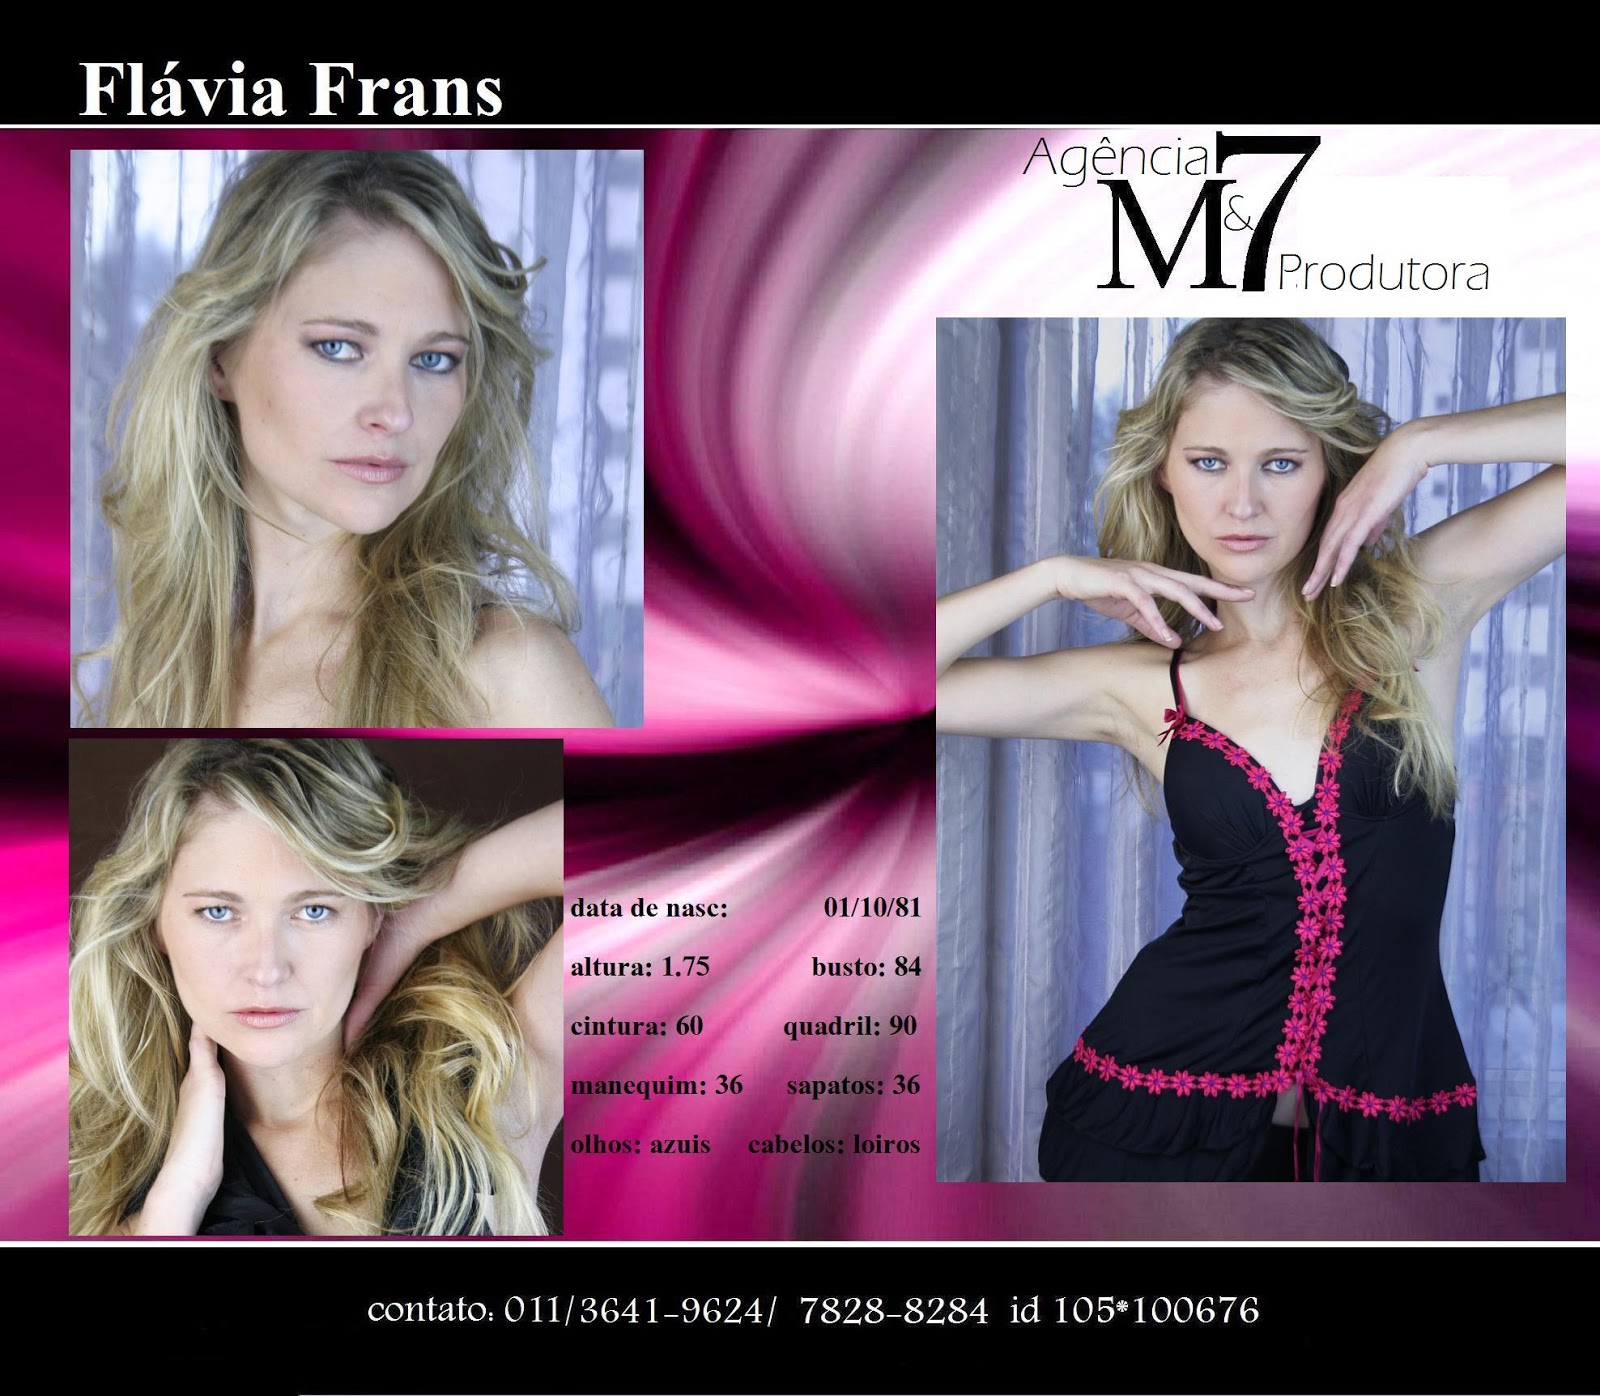 M7 Agency Models Produções Flavia Frans